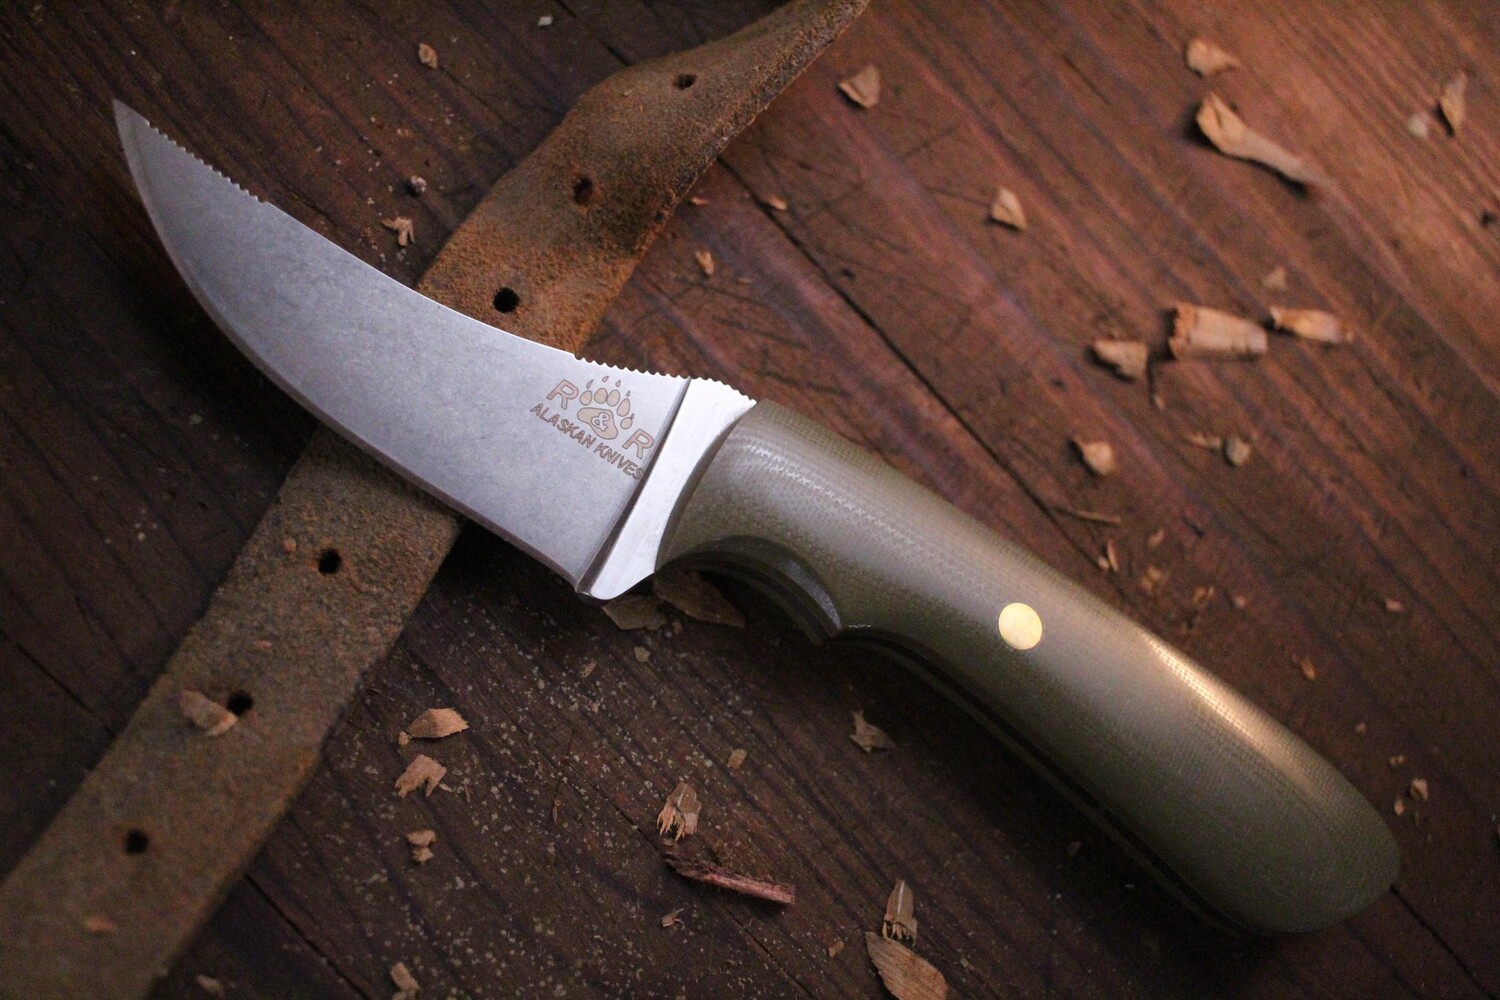 R&R Alaska Trailing Point 3.5" Fixed Blade Knife, OD Green G-10 / Satin CPM-S30V 